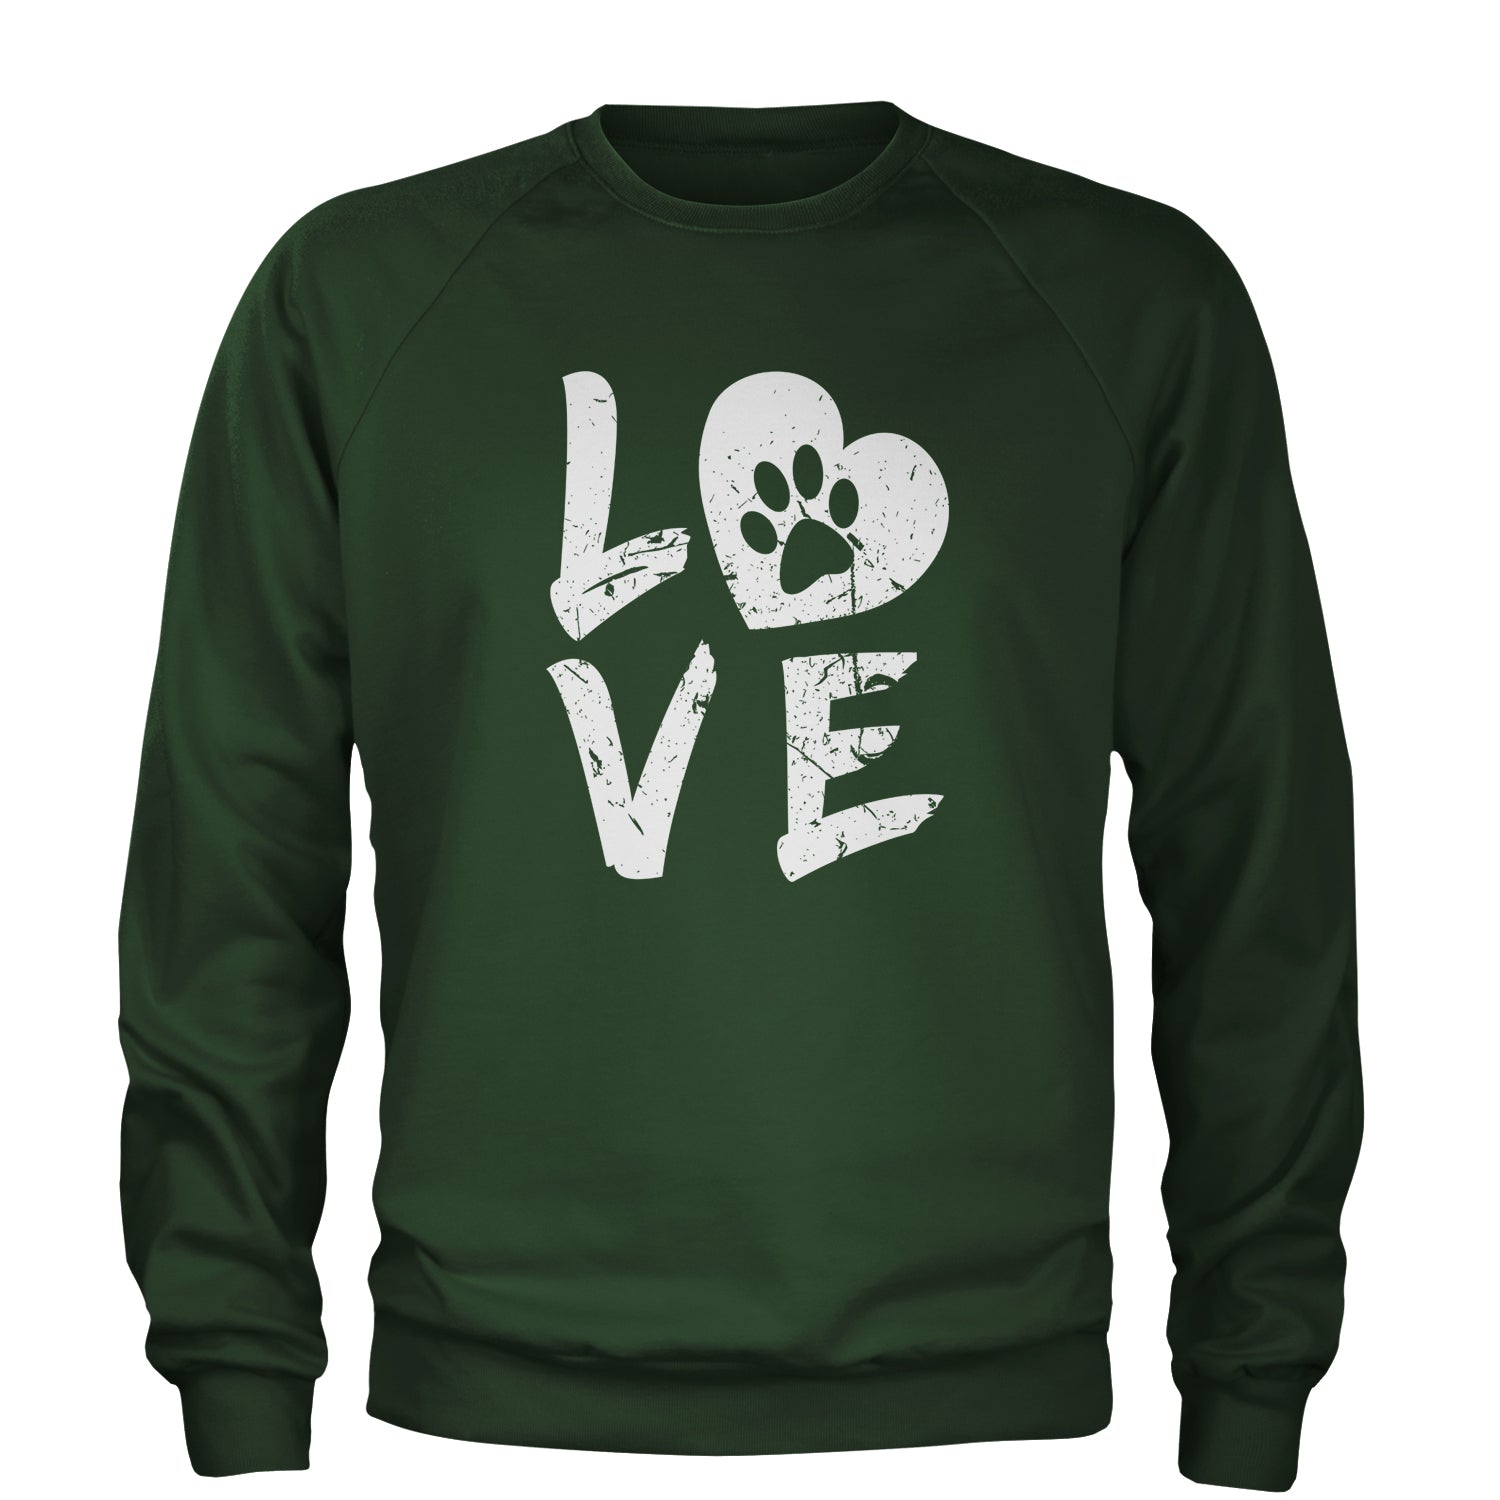 I Love My Dog Paw Print Adult Crewneck Sweatshirt dog, doggie, heart, love, lover, paw, print, puppy by Expression Tees